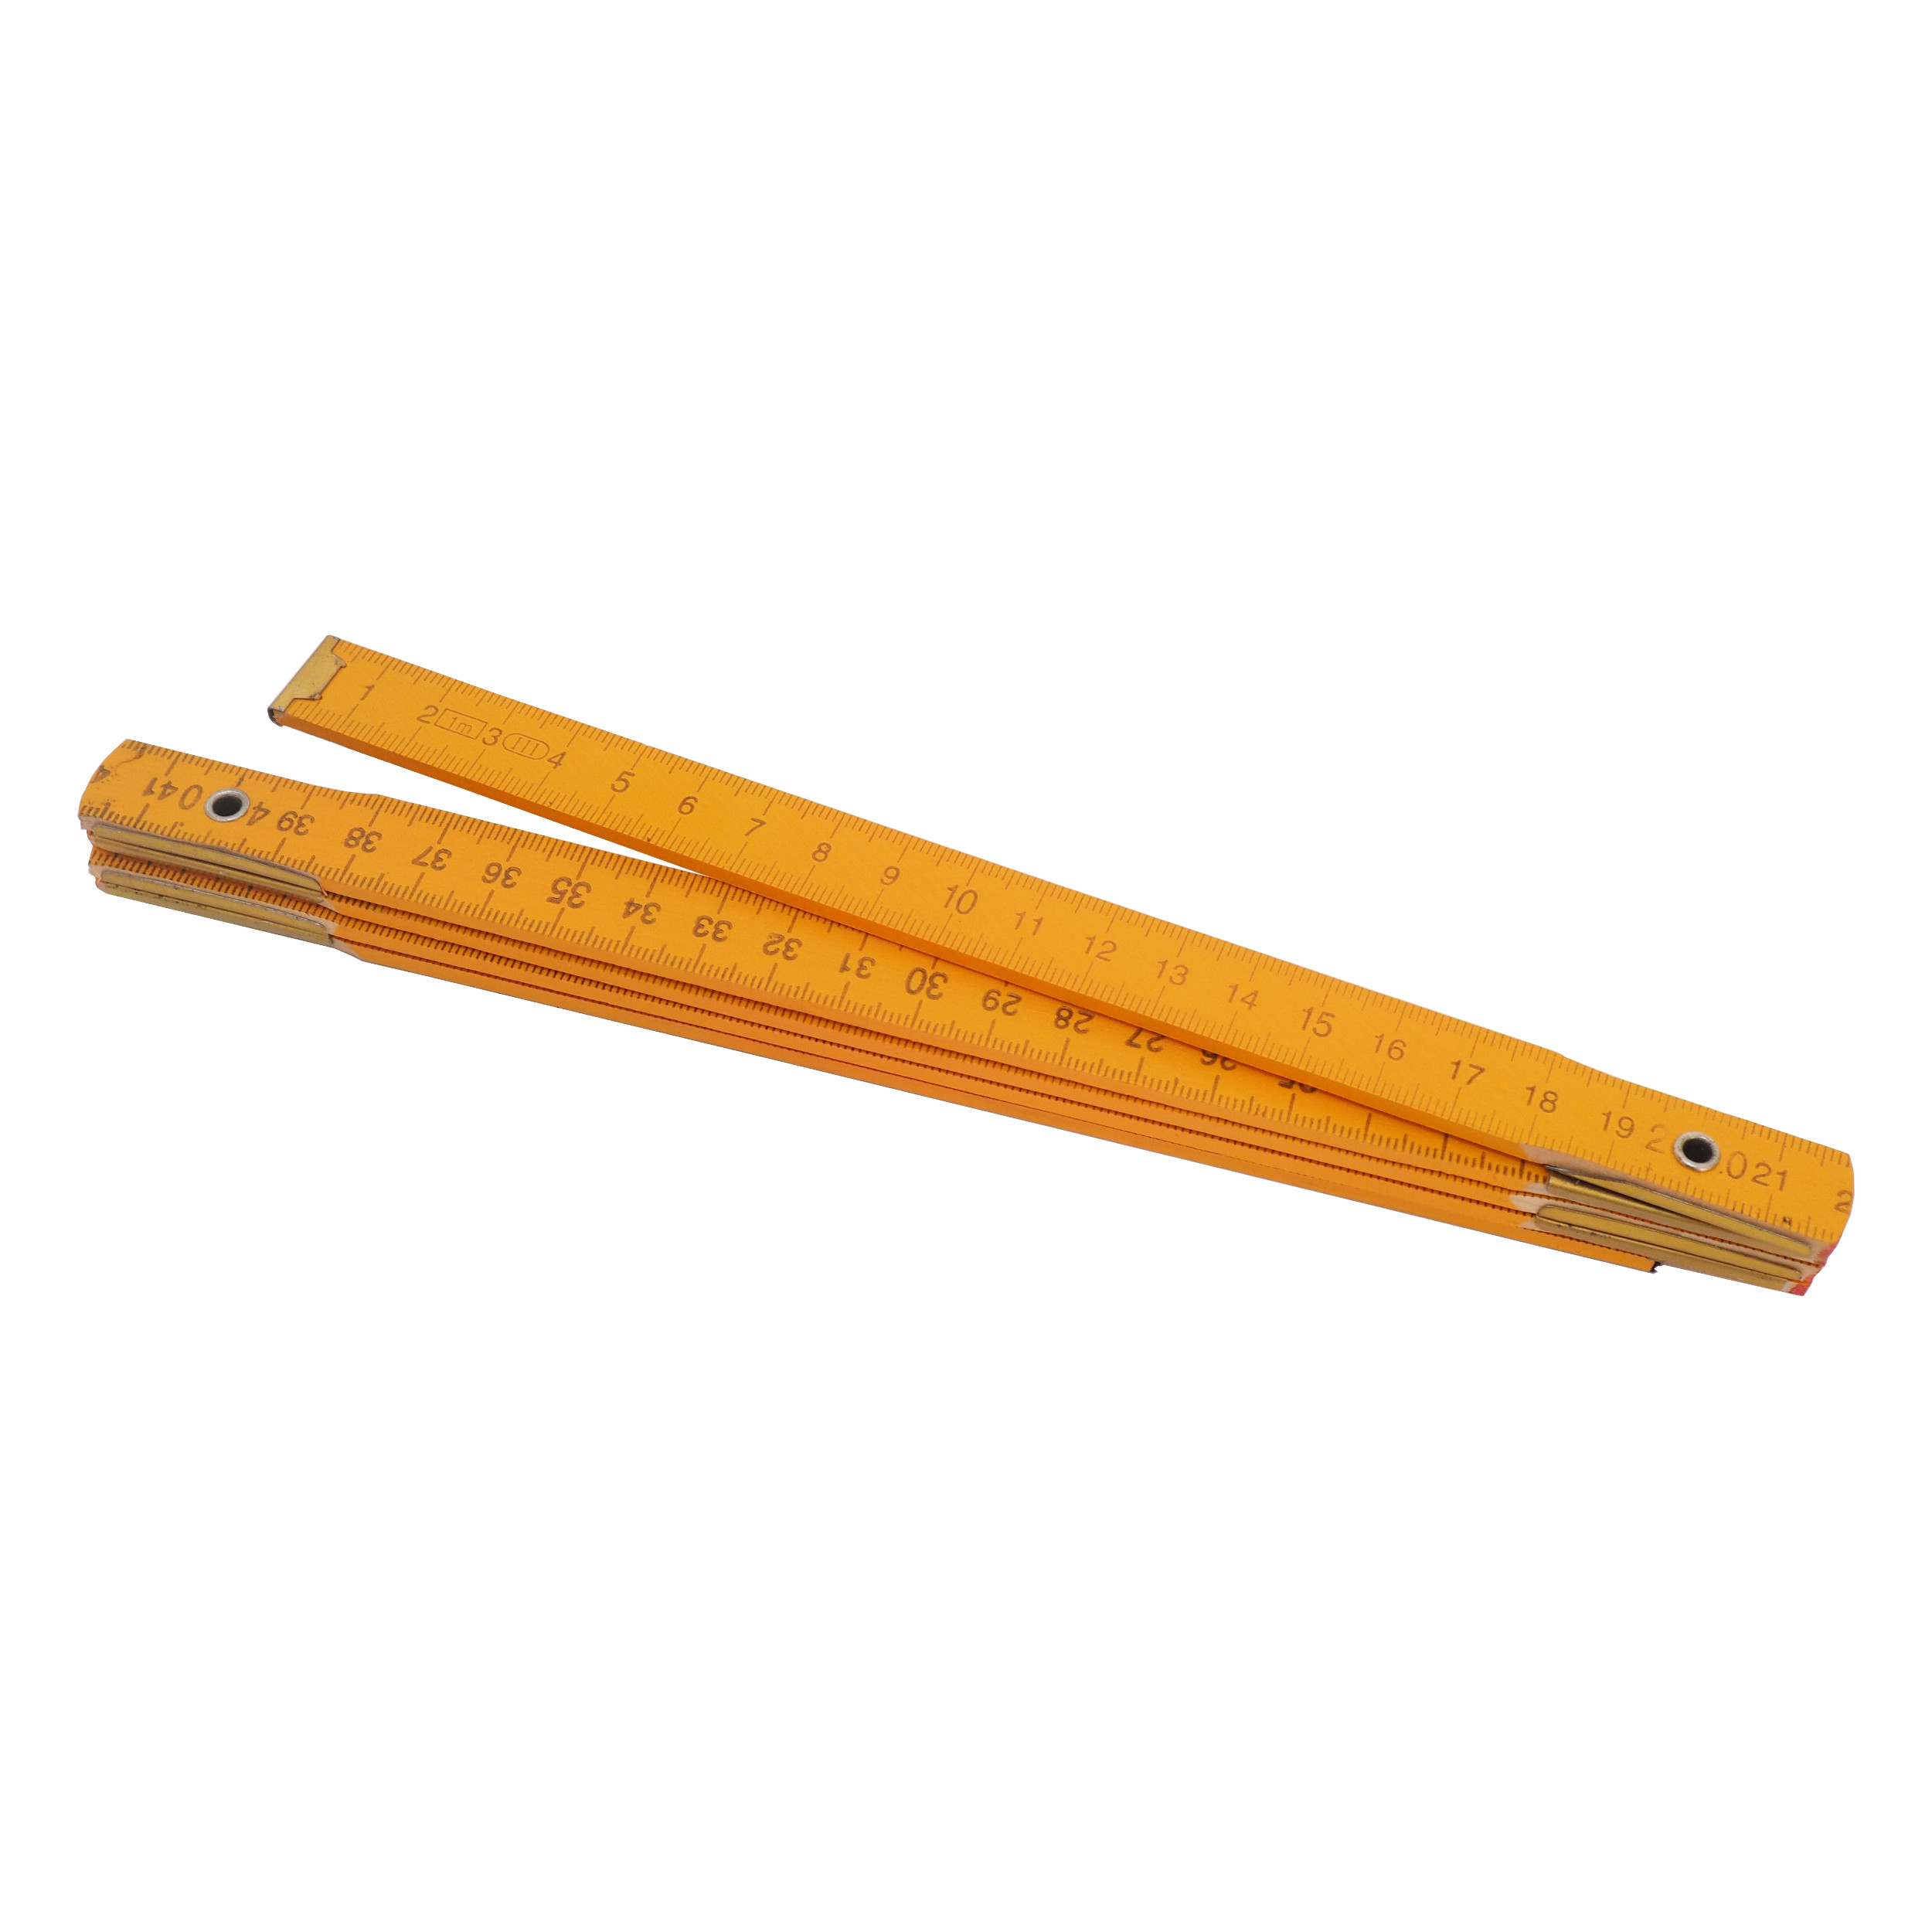 TOPTRADE metr skládací, dřevěný, žlutý, 1 m, standard 0.05 Kg TOP Sklad4 500100 430